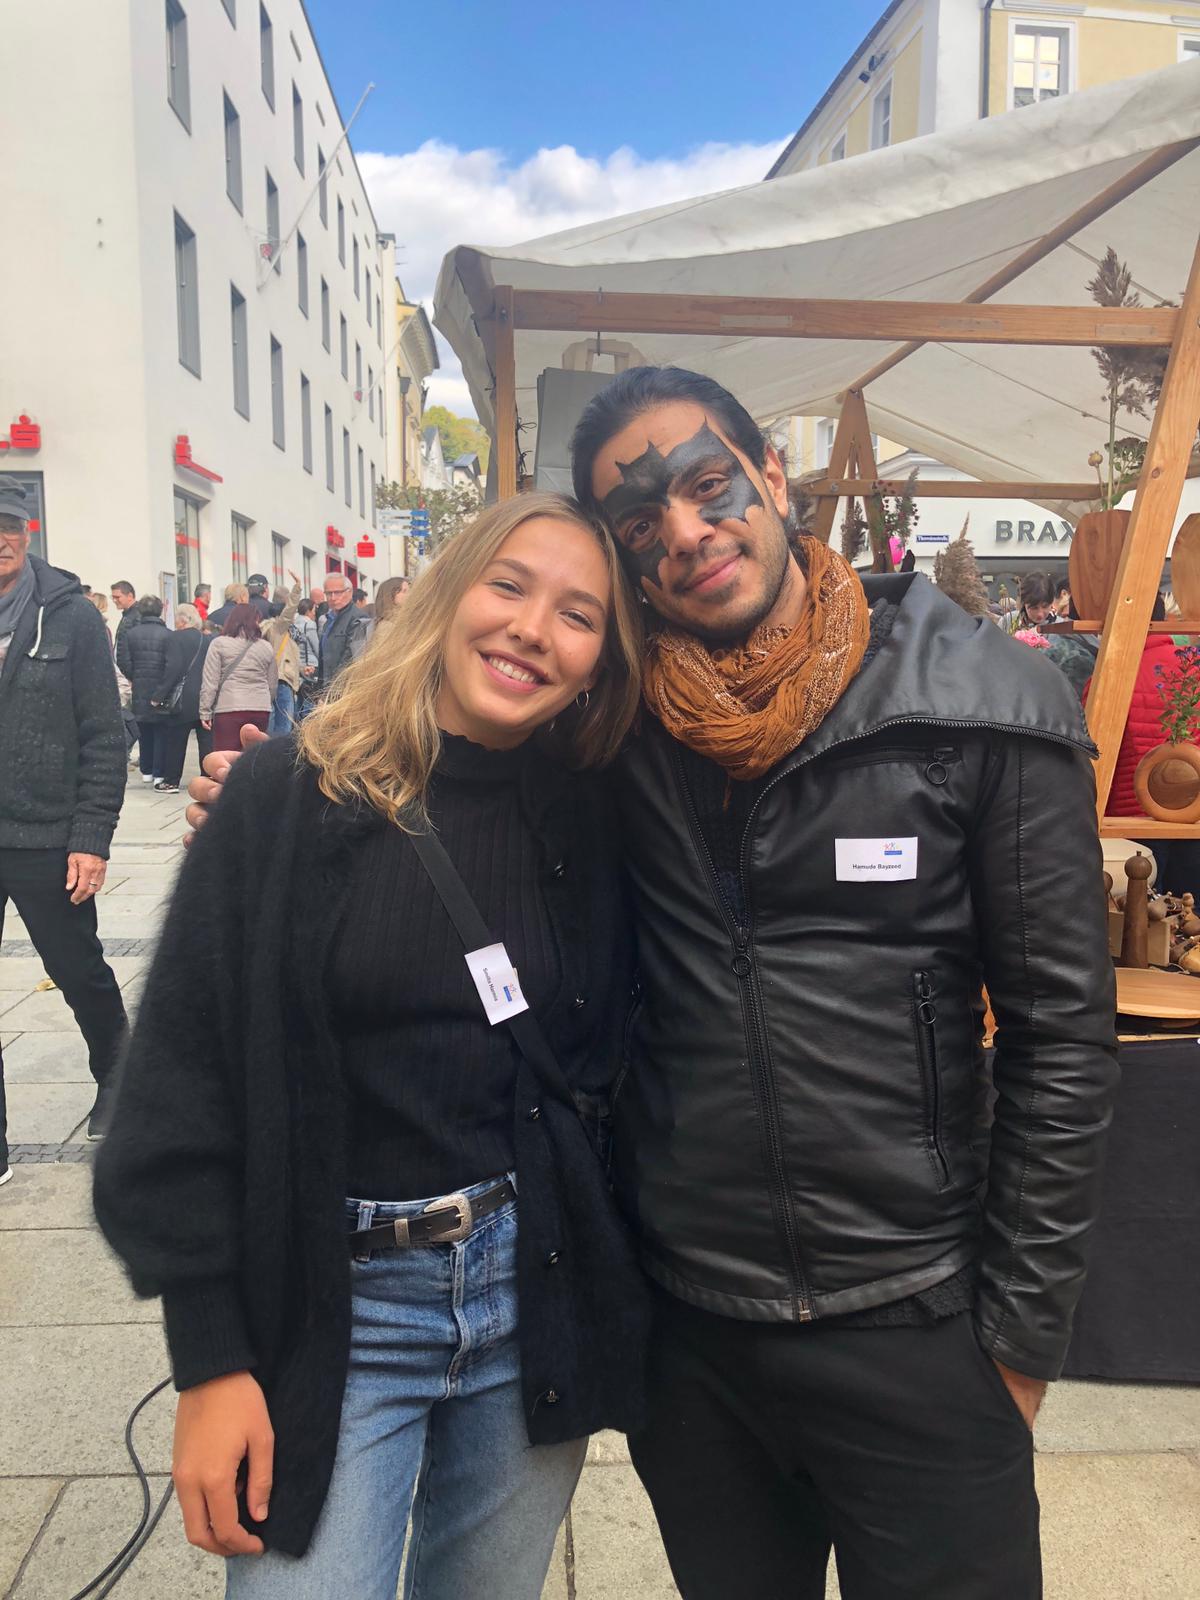 Kinderschminken auf dem Passauer Herbstmarkt 2018